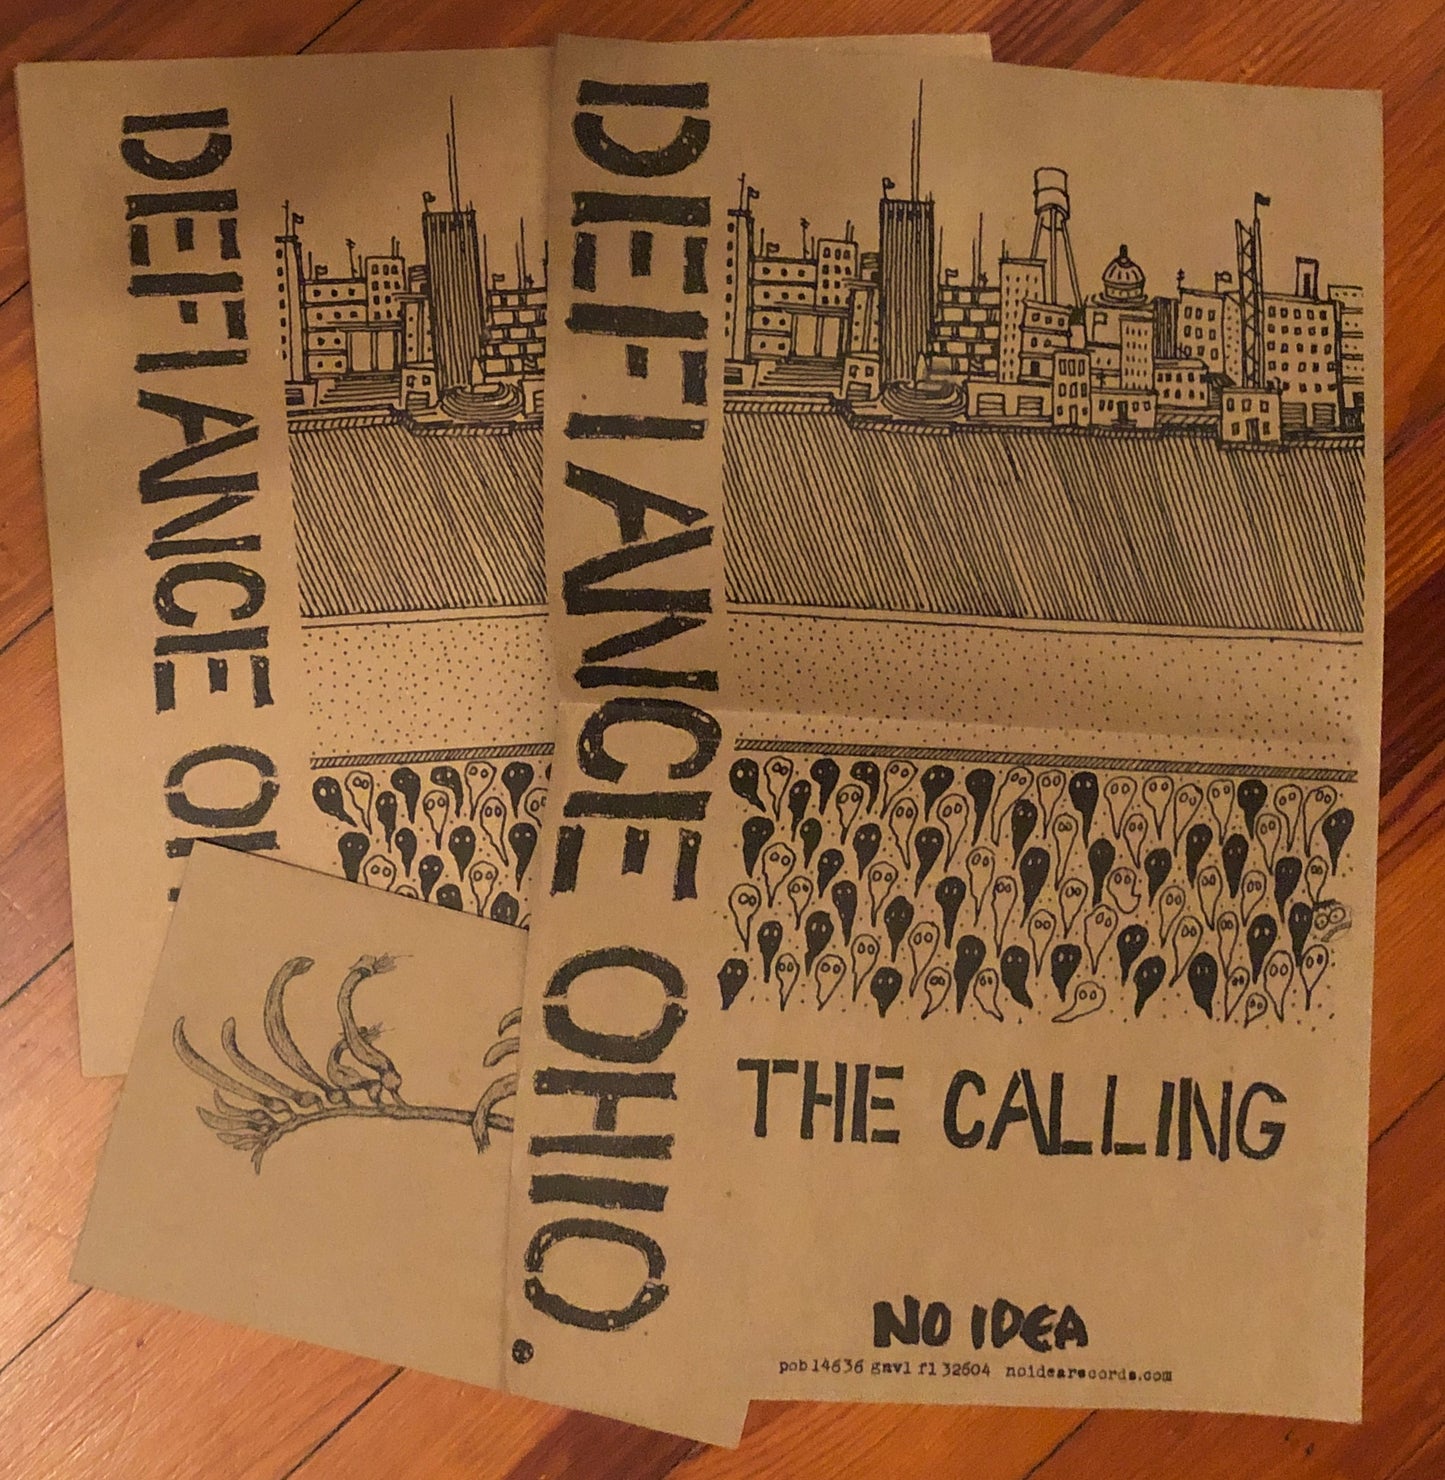 DEFIANCE, OHIO "The Calling"